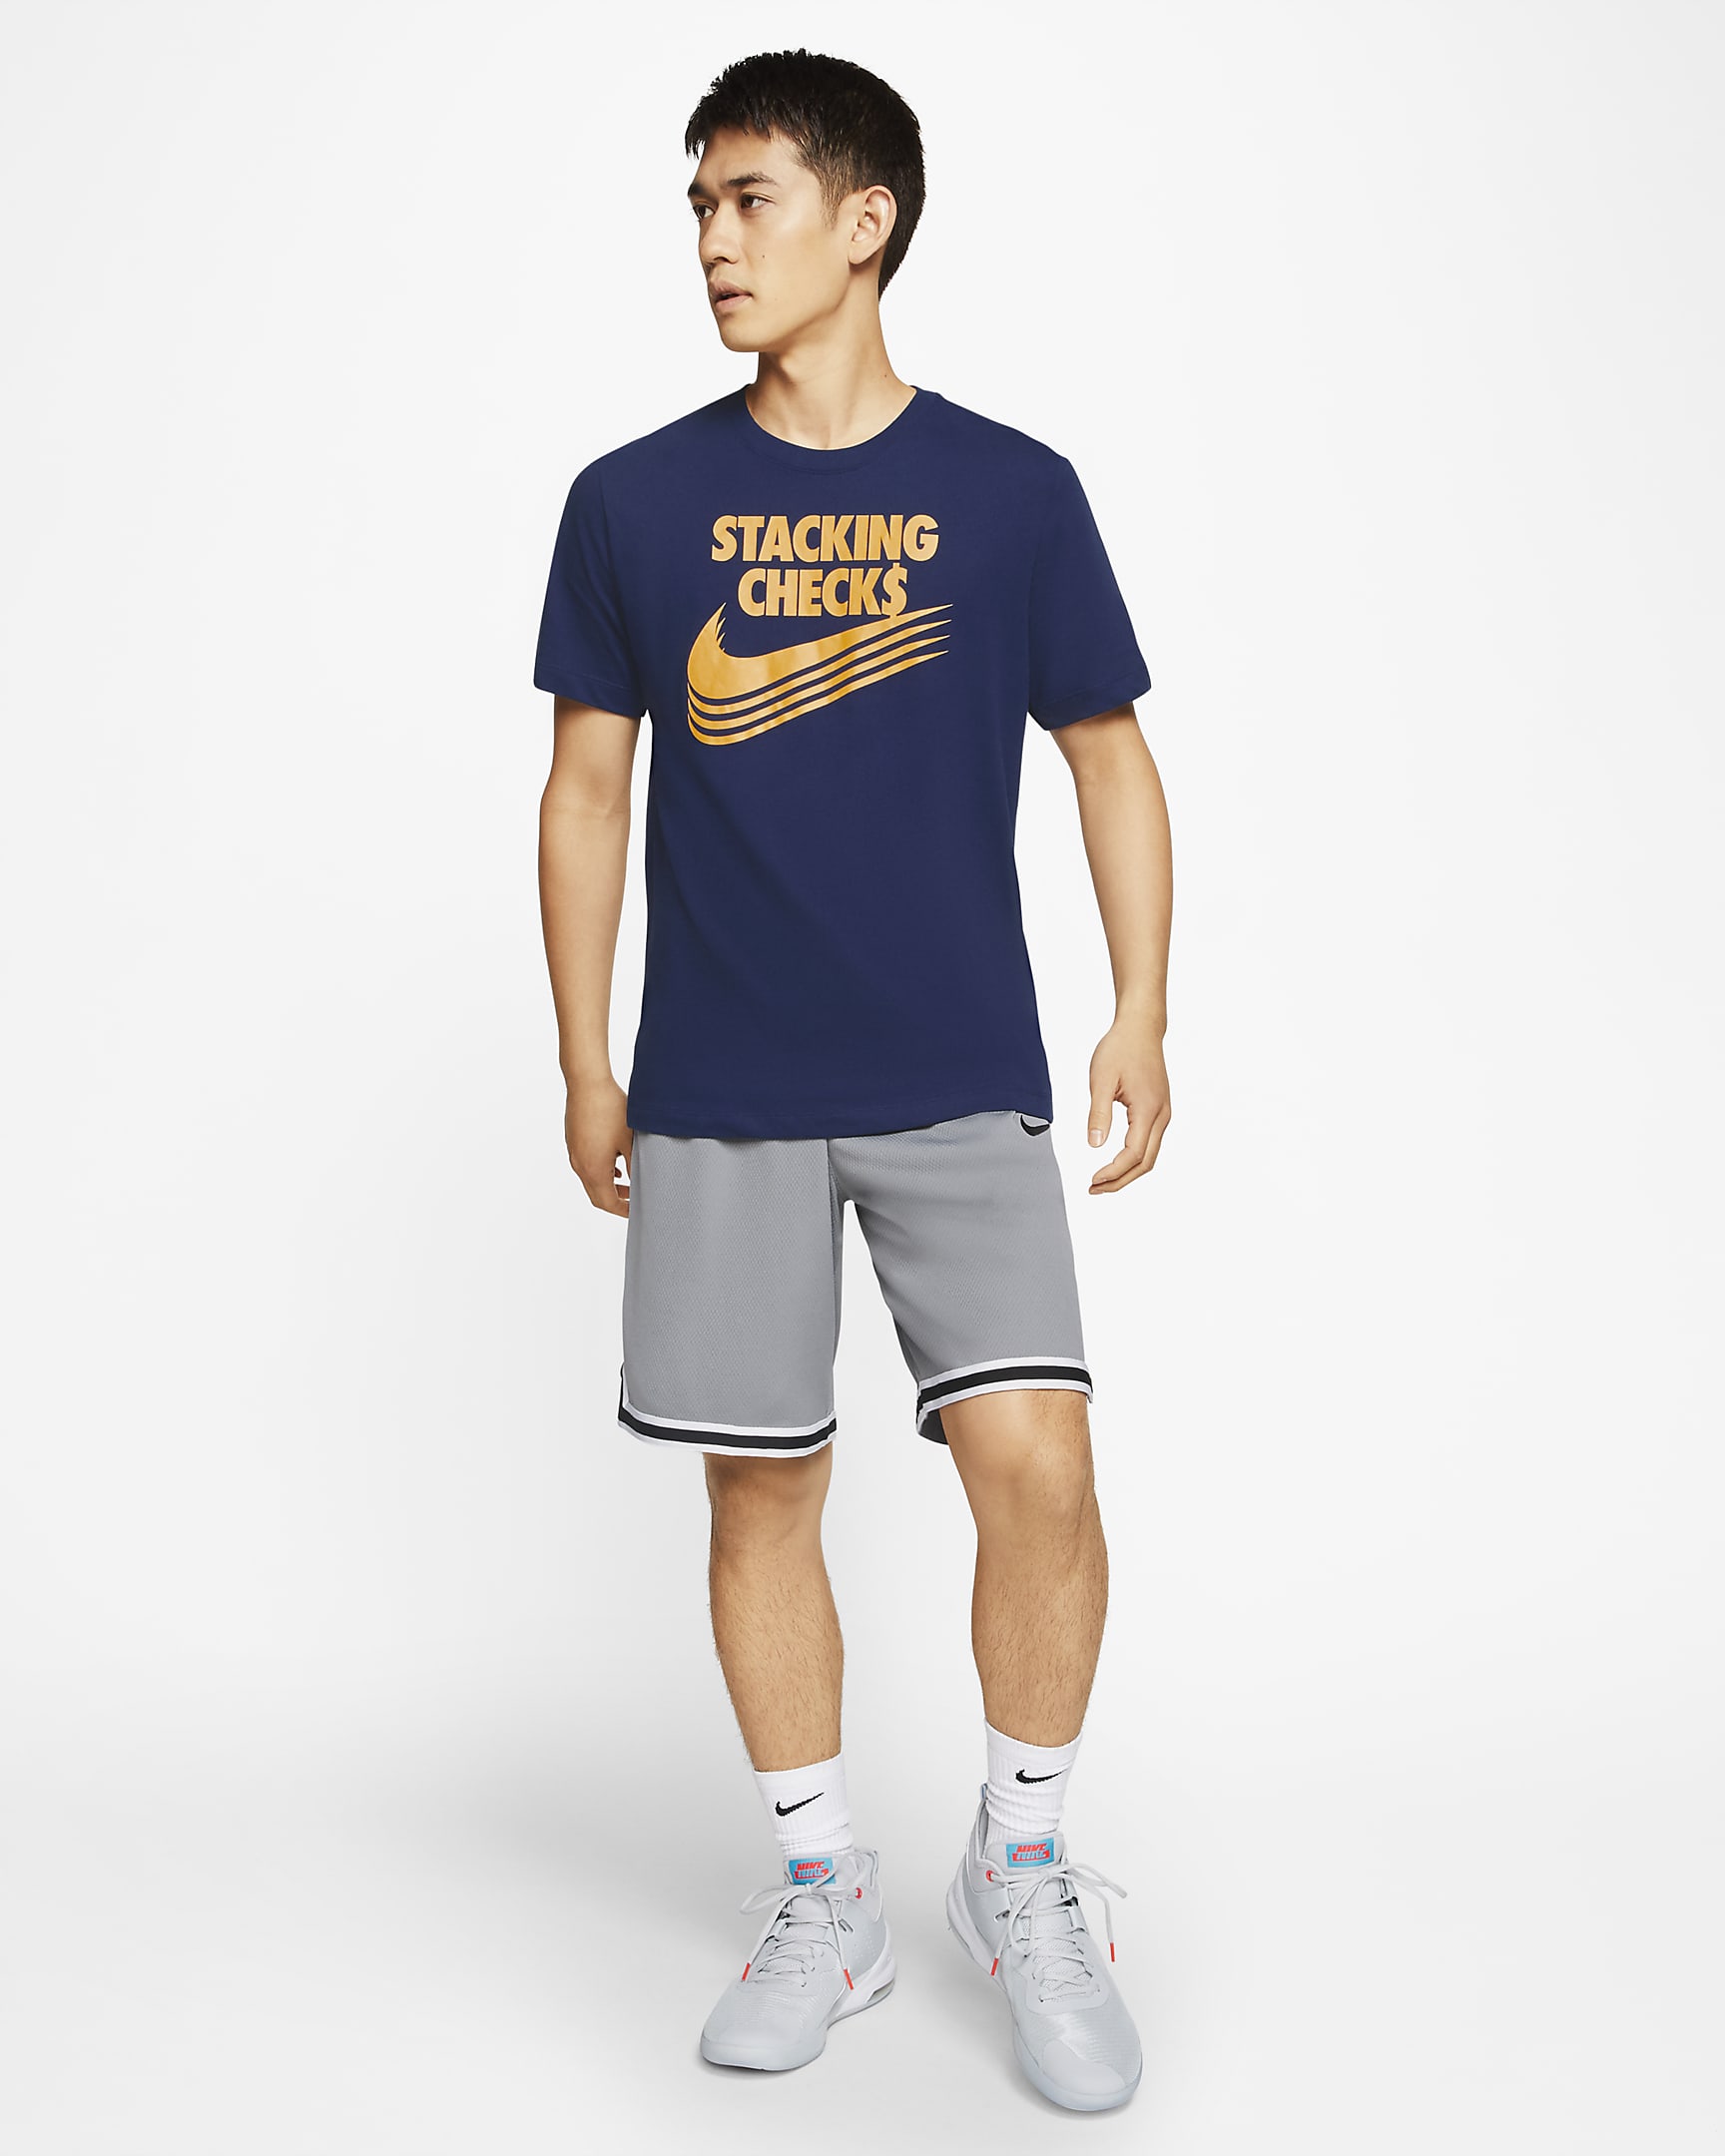 Nike Dri-FIT Stacking Checks Men's Basketball T-Shirt. Nike JP